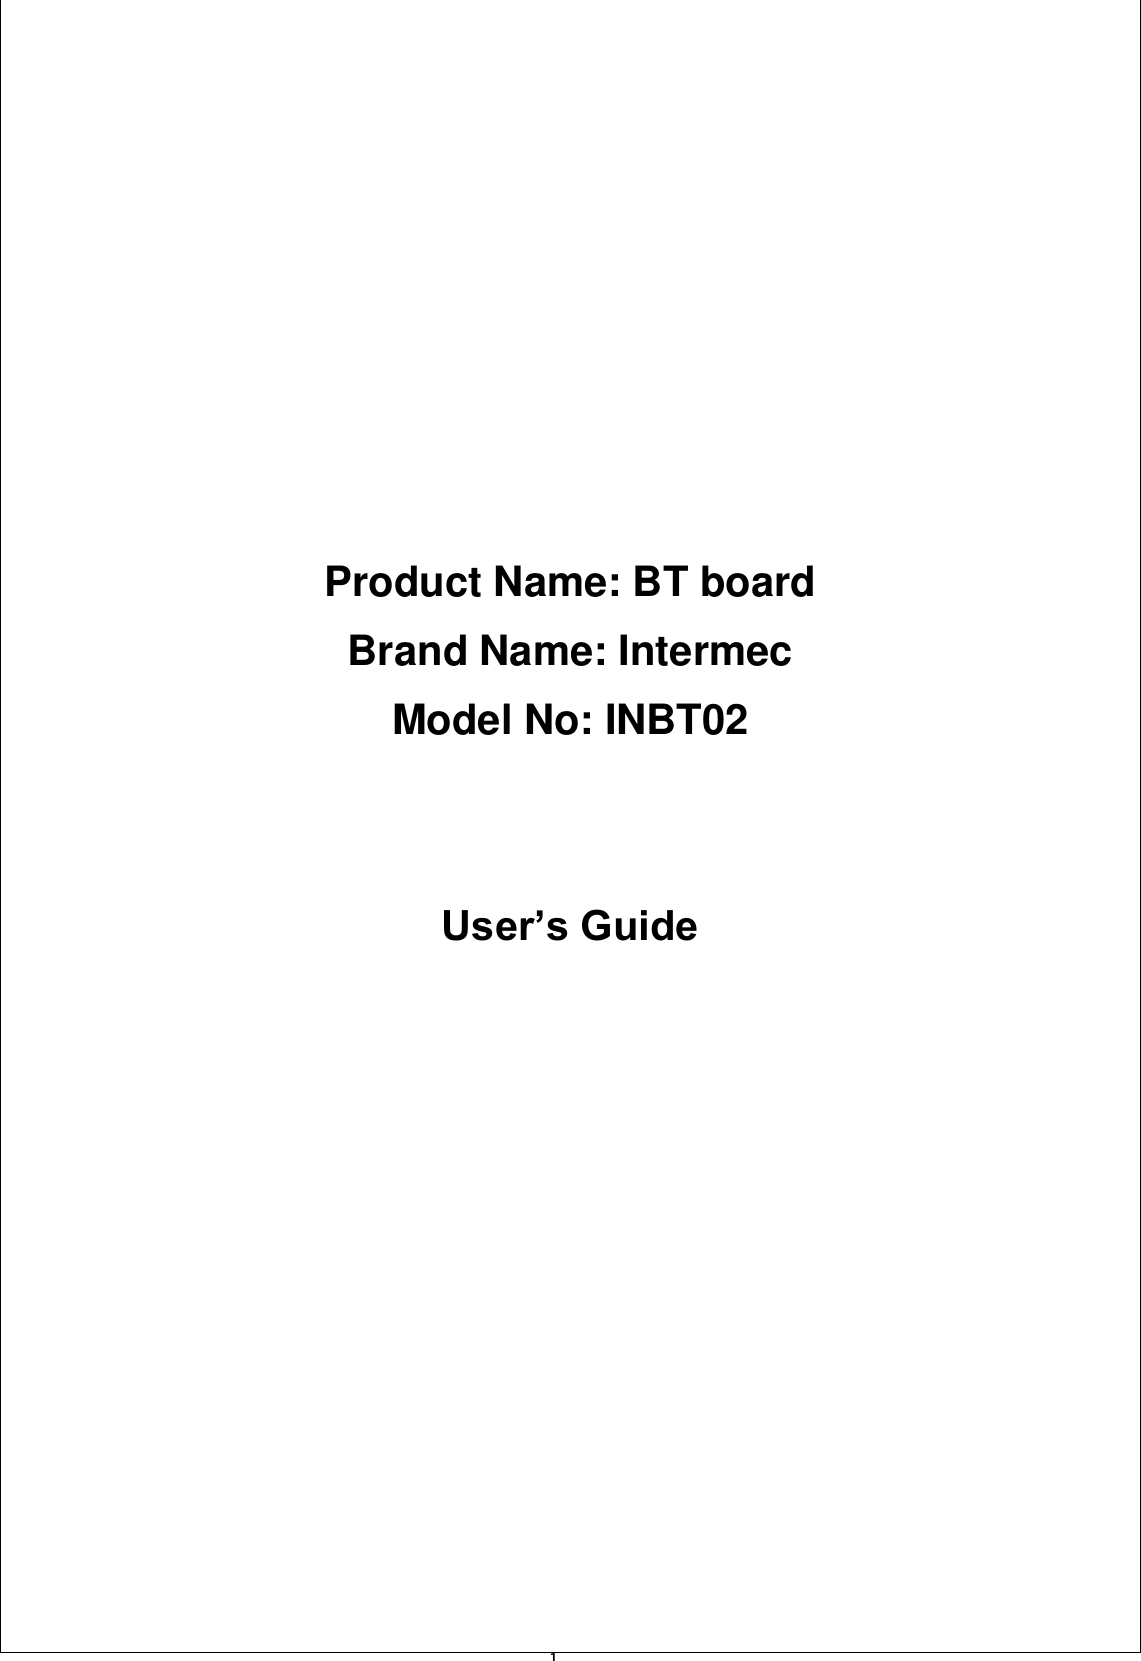   1                       Product Name: BT board Brand Name: Intermec Model No: INBT02   User’s Guide     